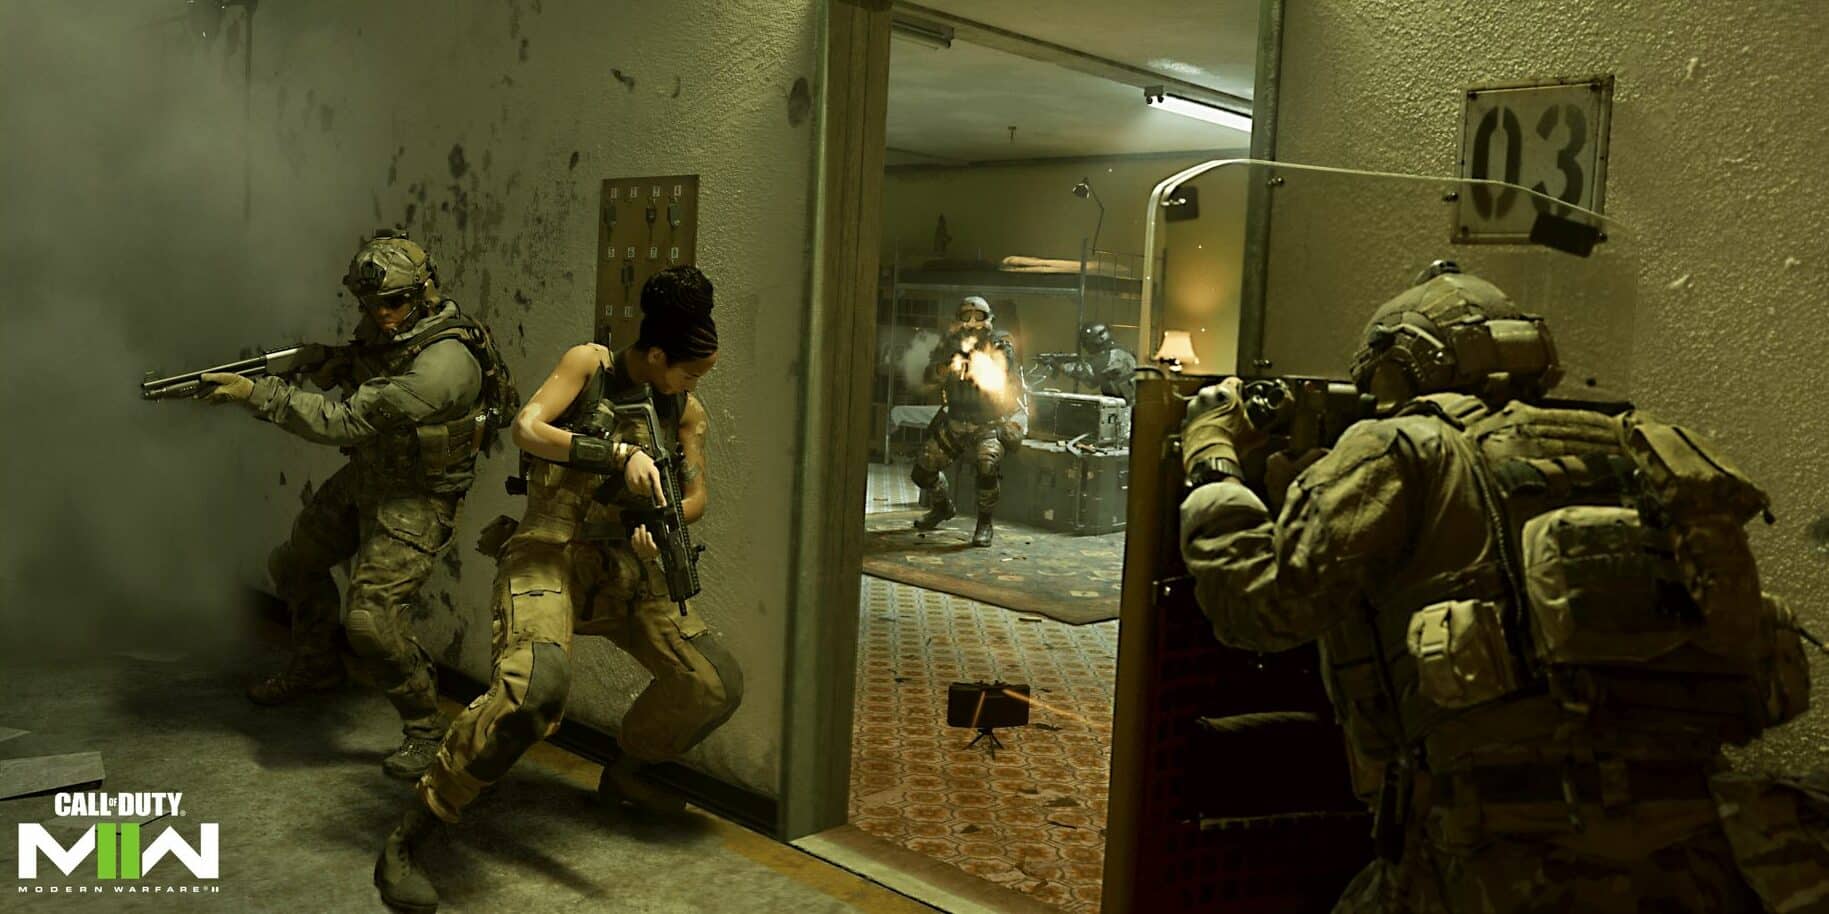 Call of Duty Confirms Gun Game Return to MW2